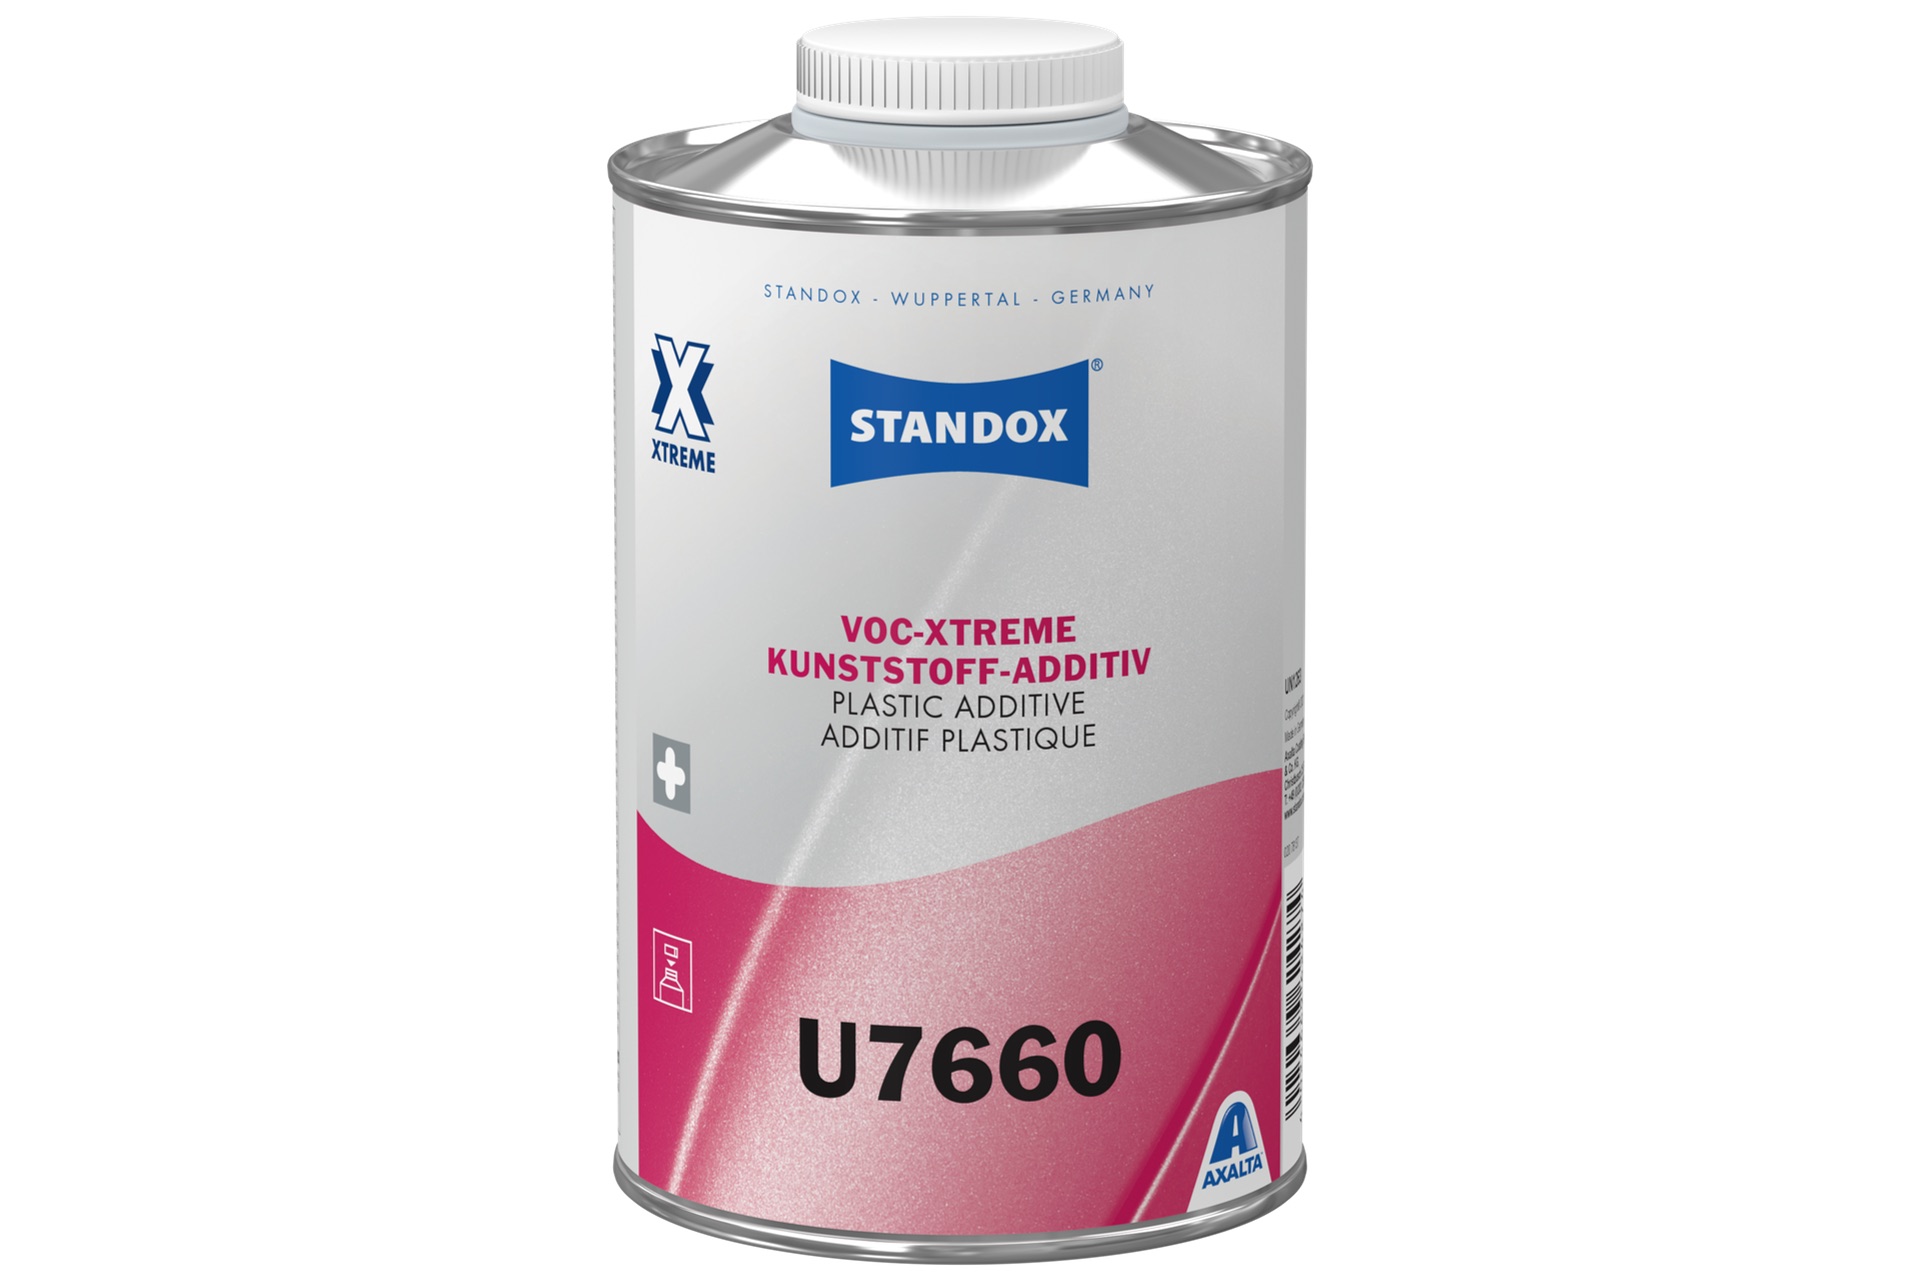 Standox Launches VOC Extreme Plastic Additive U7660 In Australia